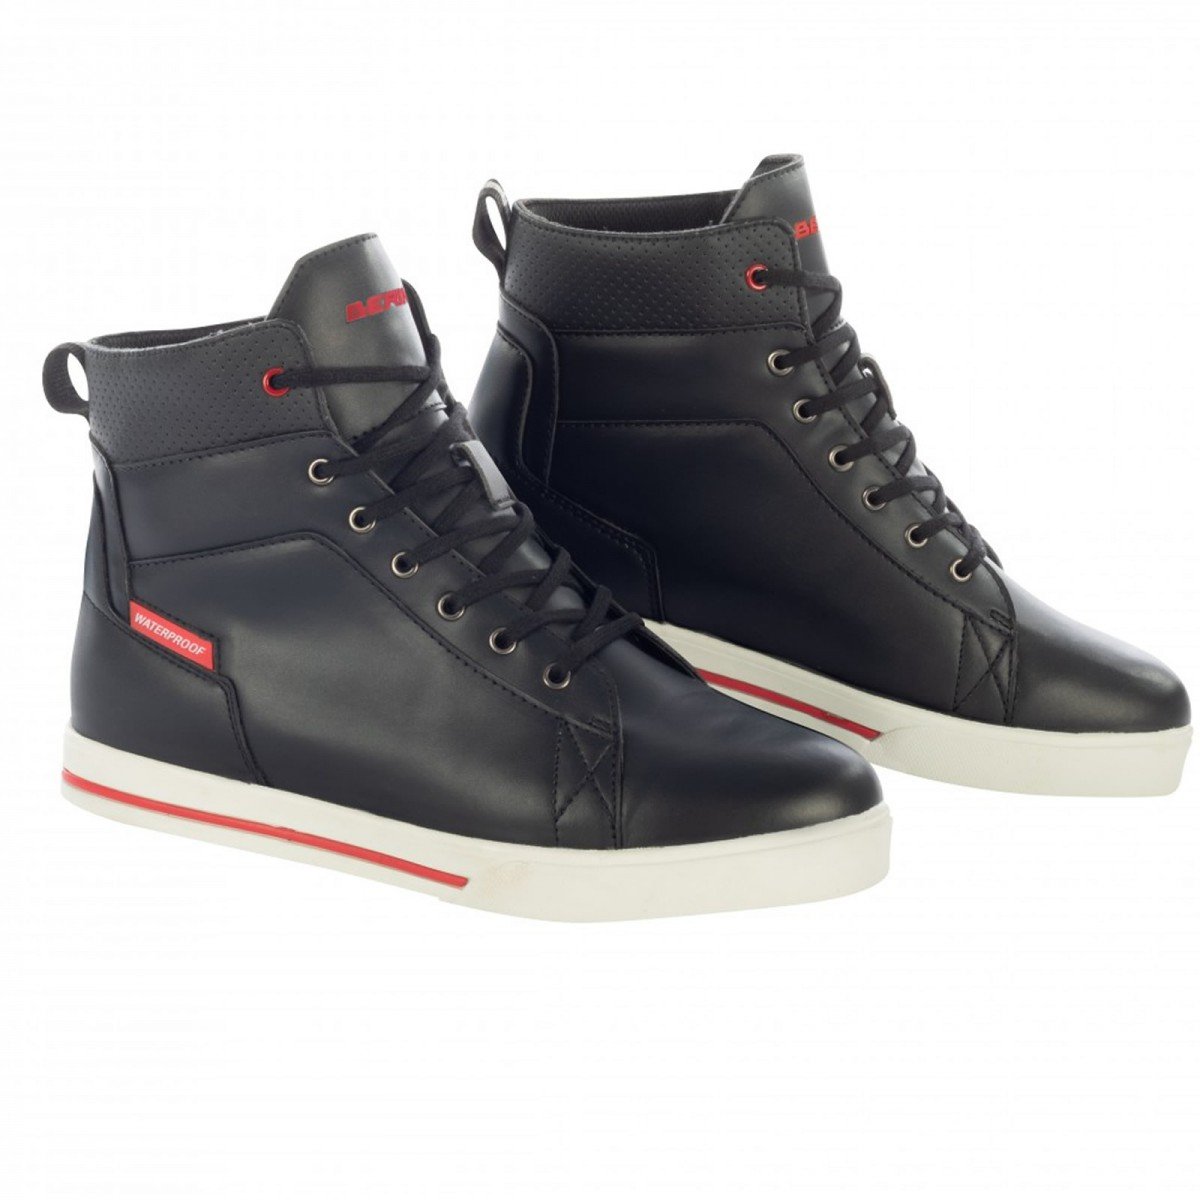 Image of Bering Sneakers Indy Black Red Size 41 EN